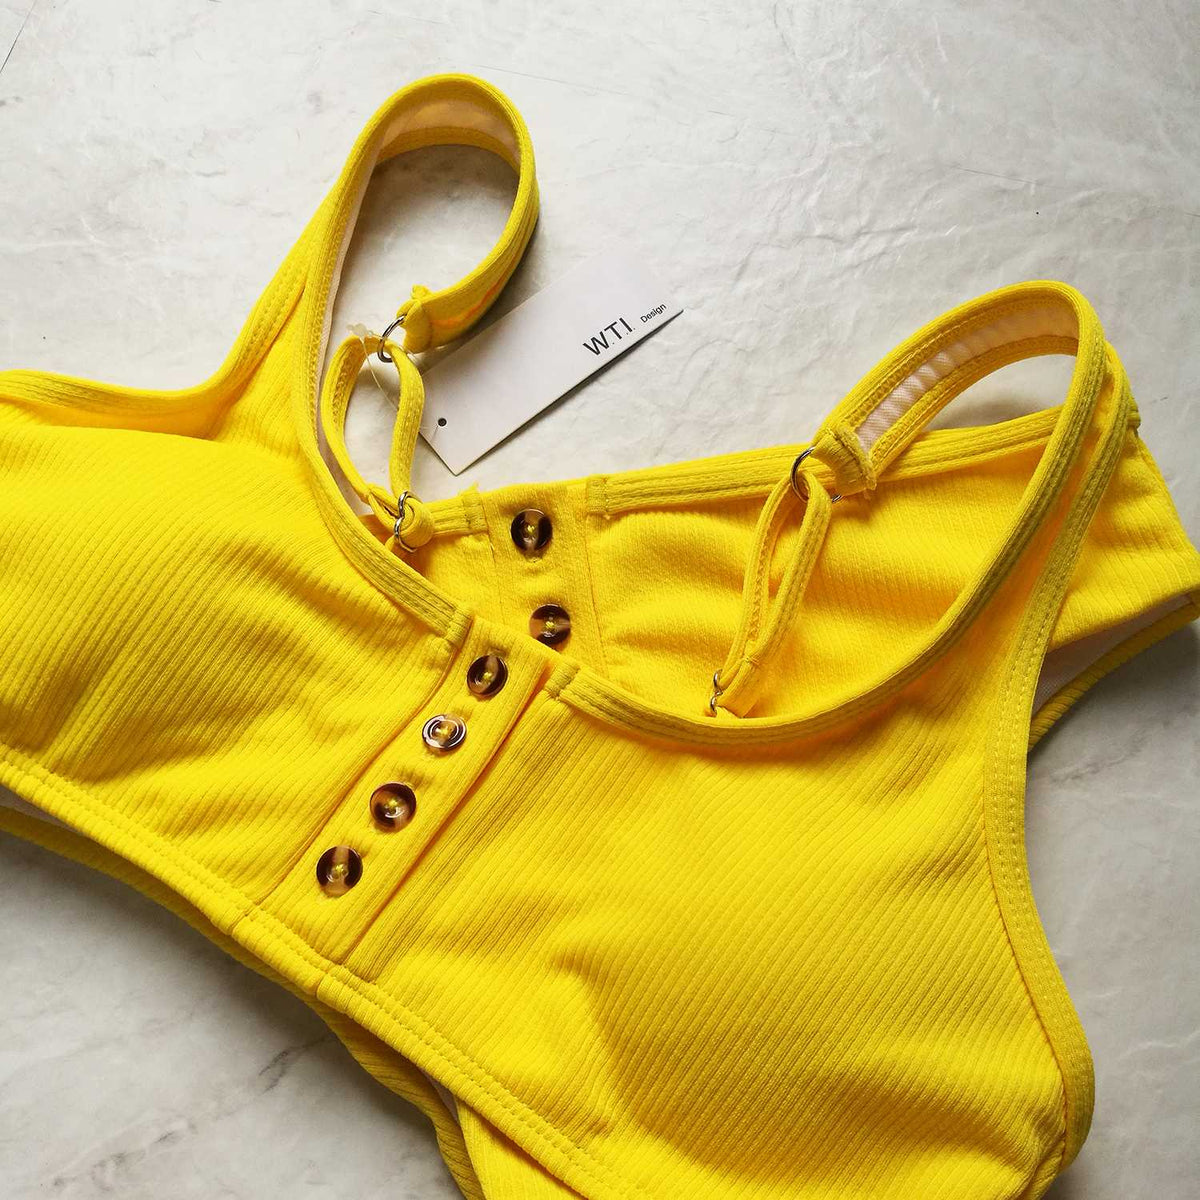 Ribbed Sporty Button Up Crop Top Bikini Set - worthtryit.com